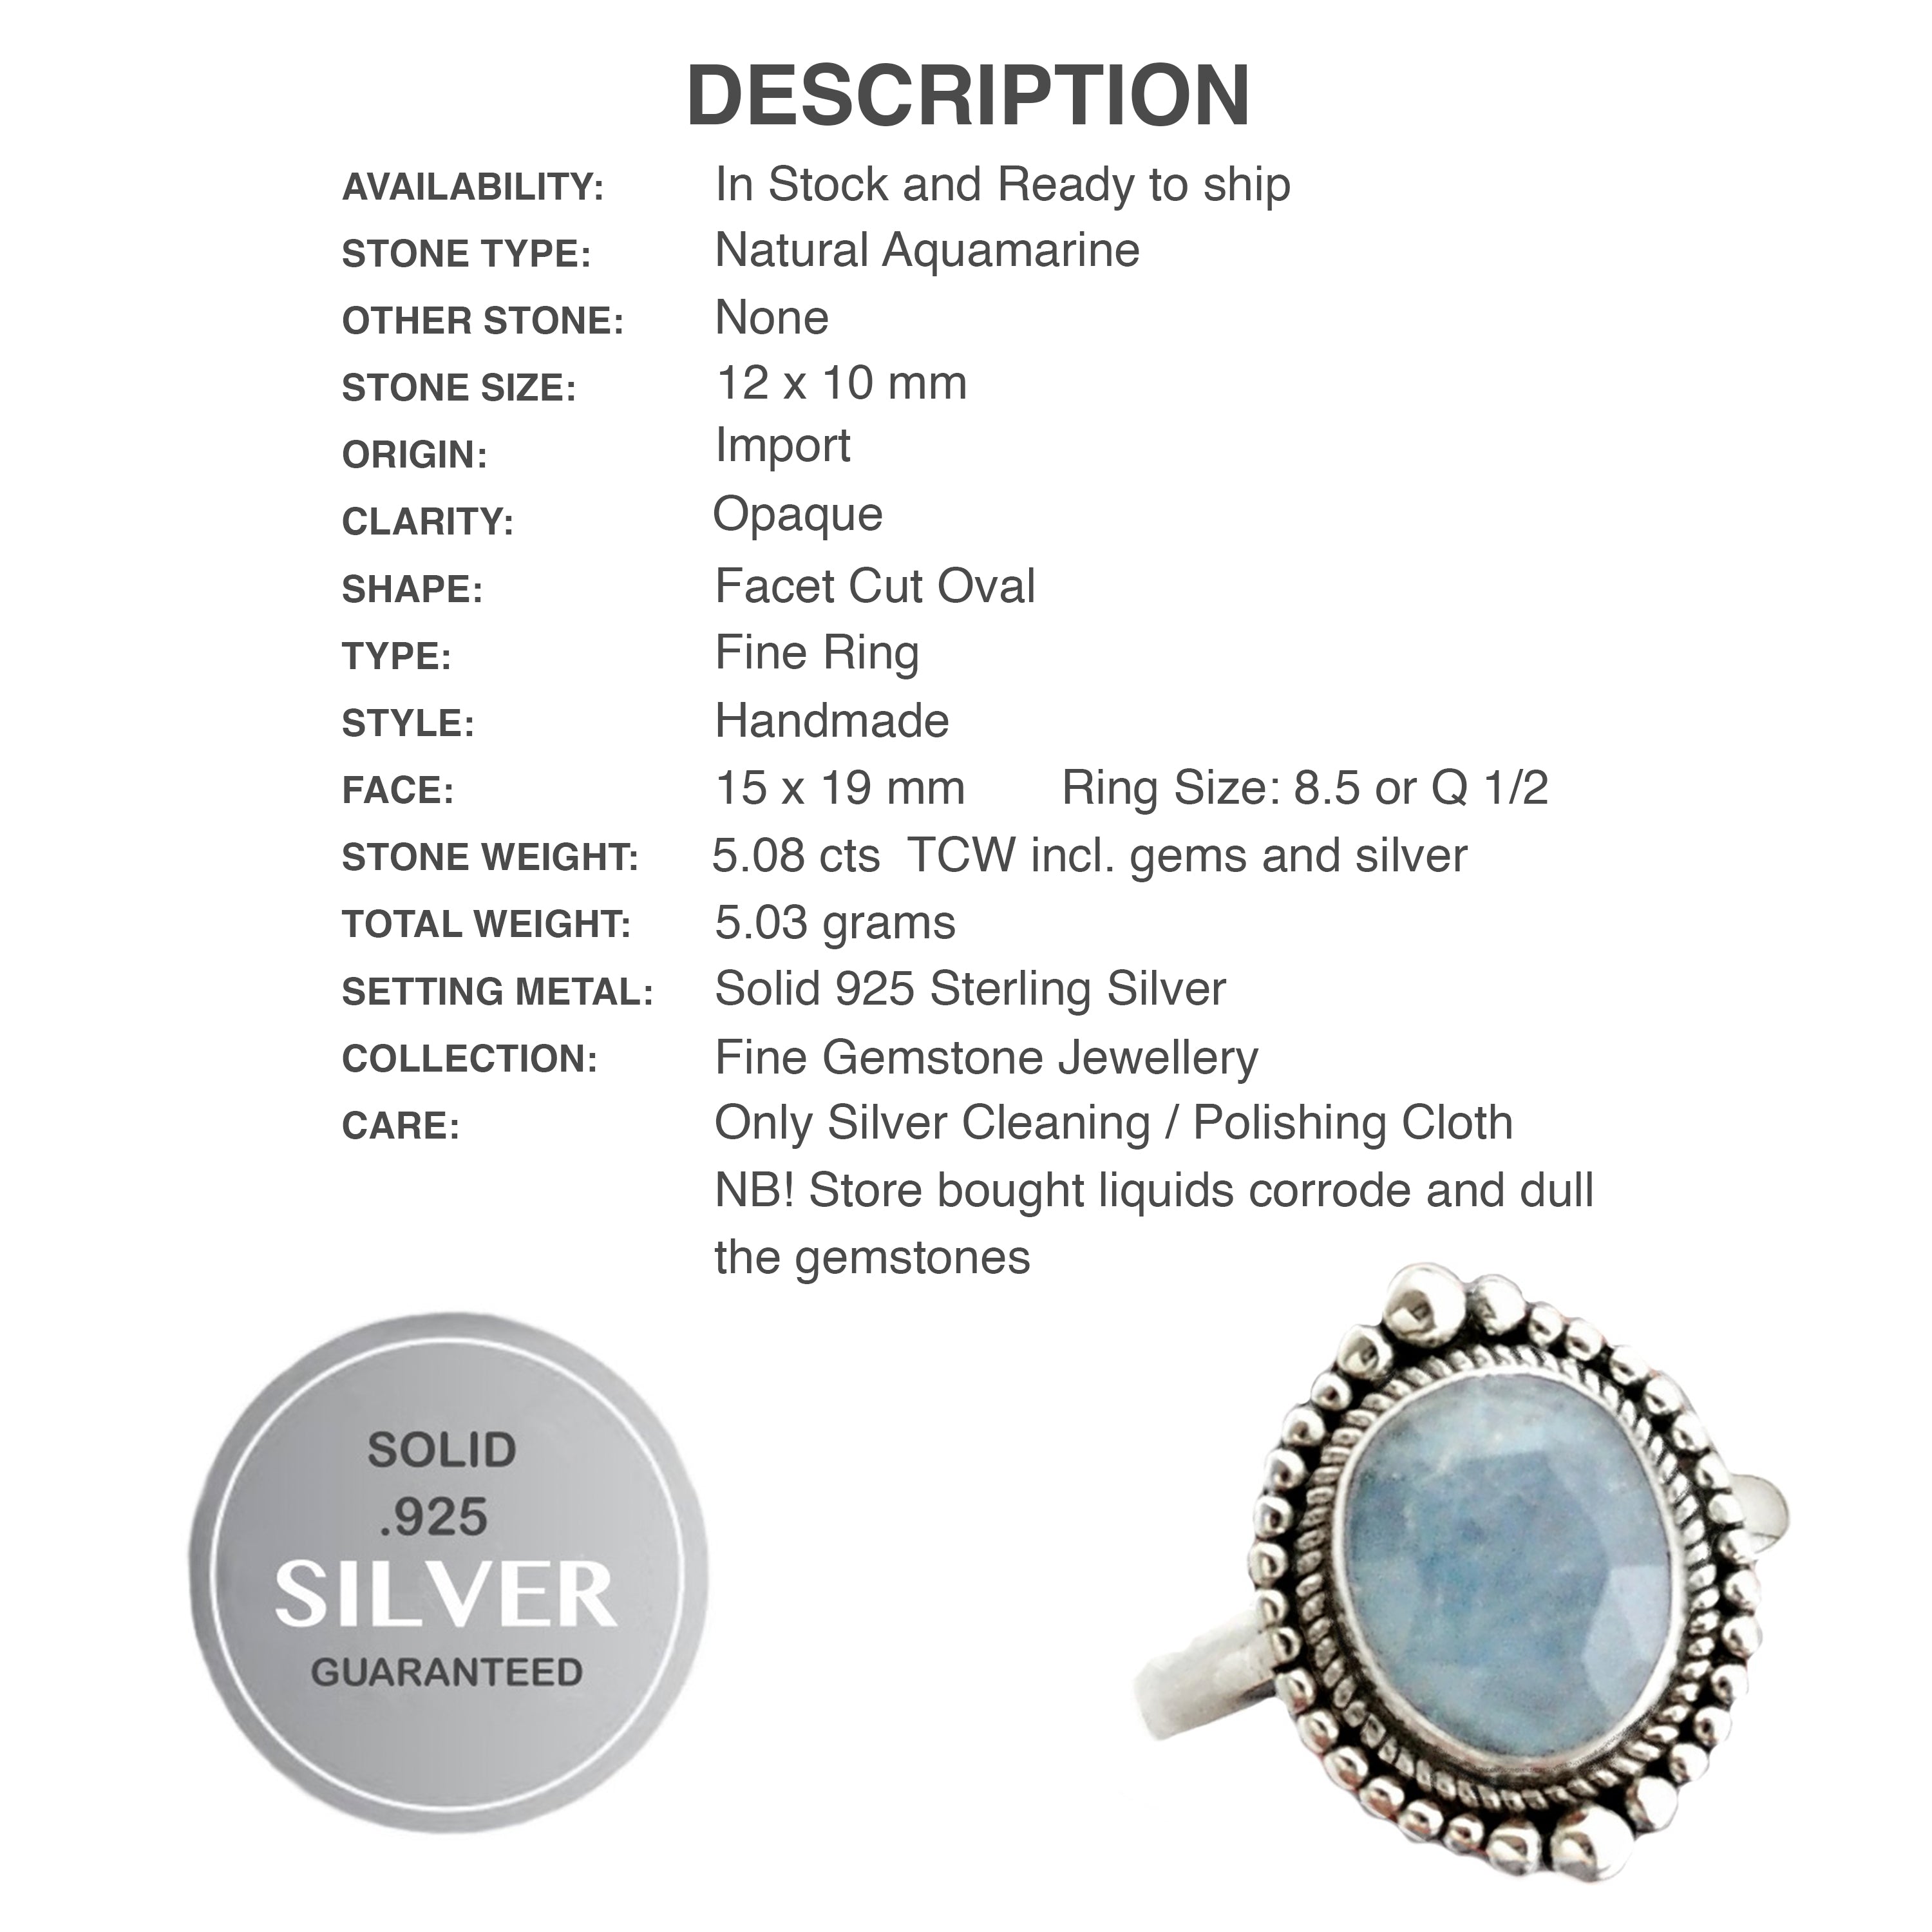 5.08 cts Natural Aquamarine Gemstone Set Solid .925 Sterling Silver Ring Size 8.5 or Q 1/2 - BELLADONNA